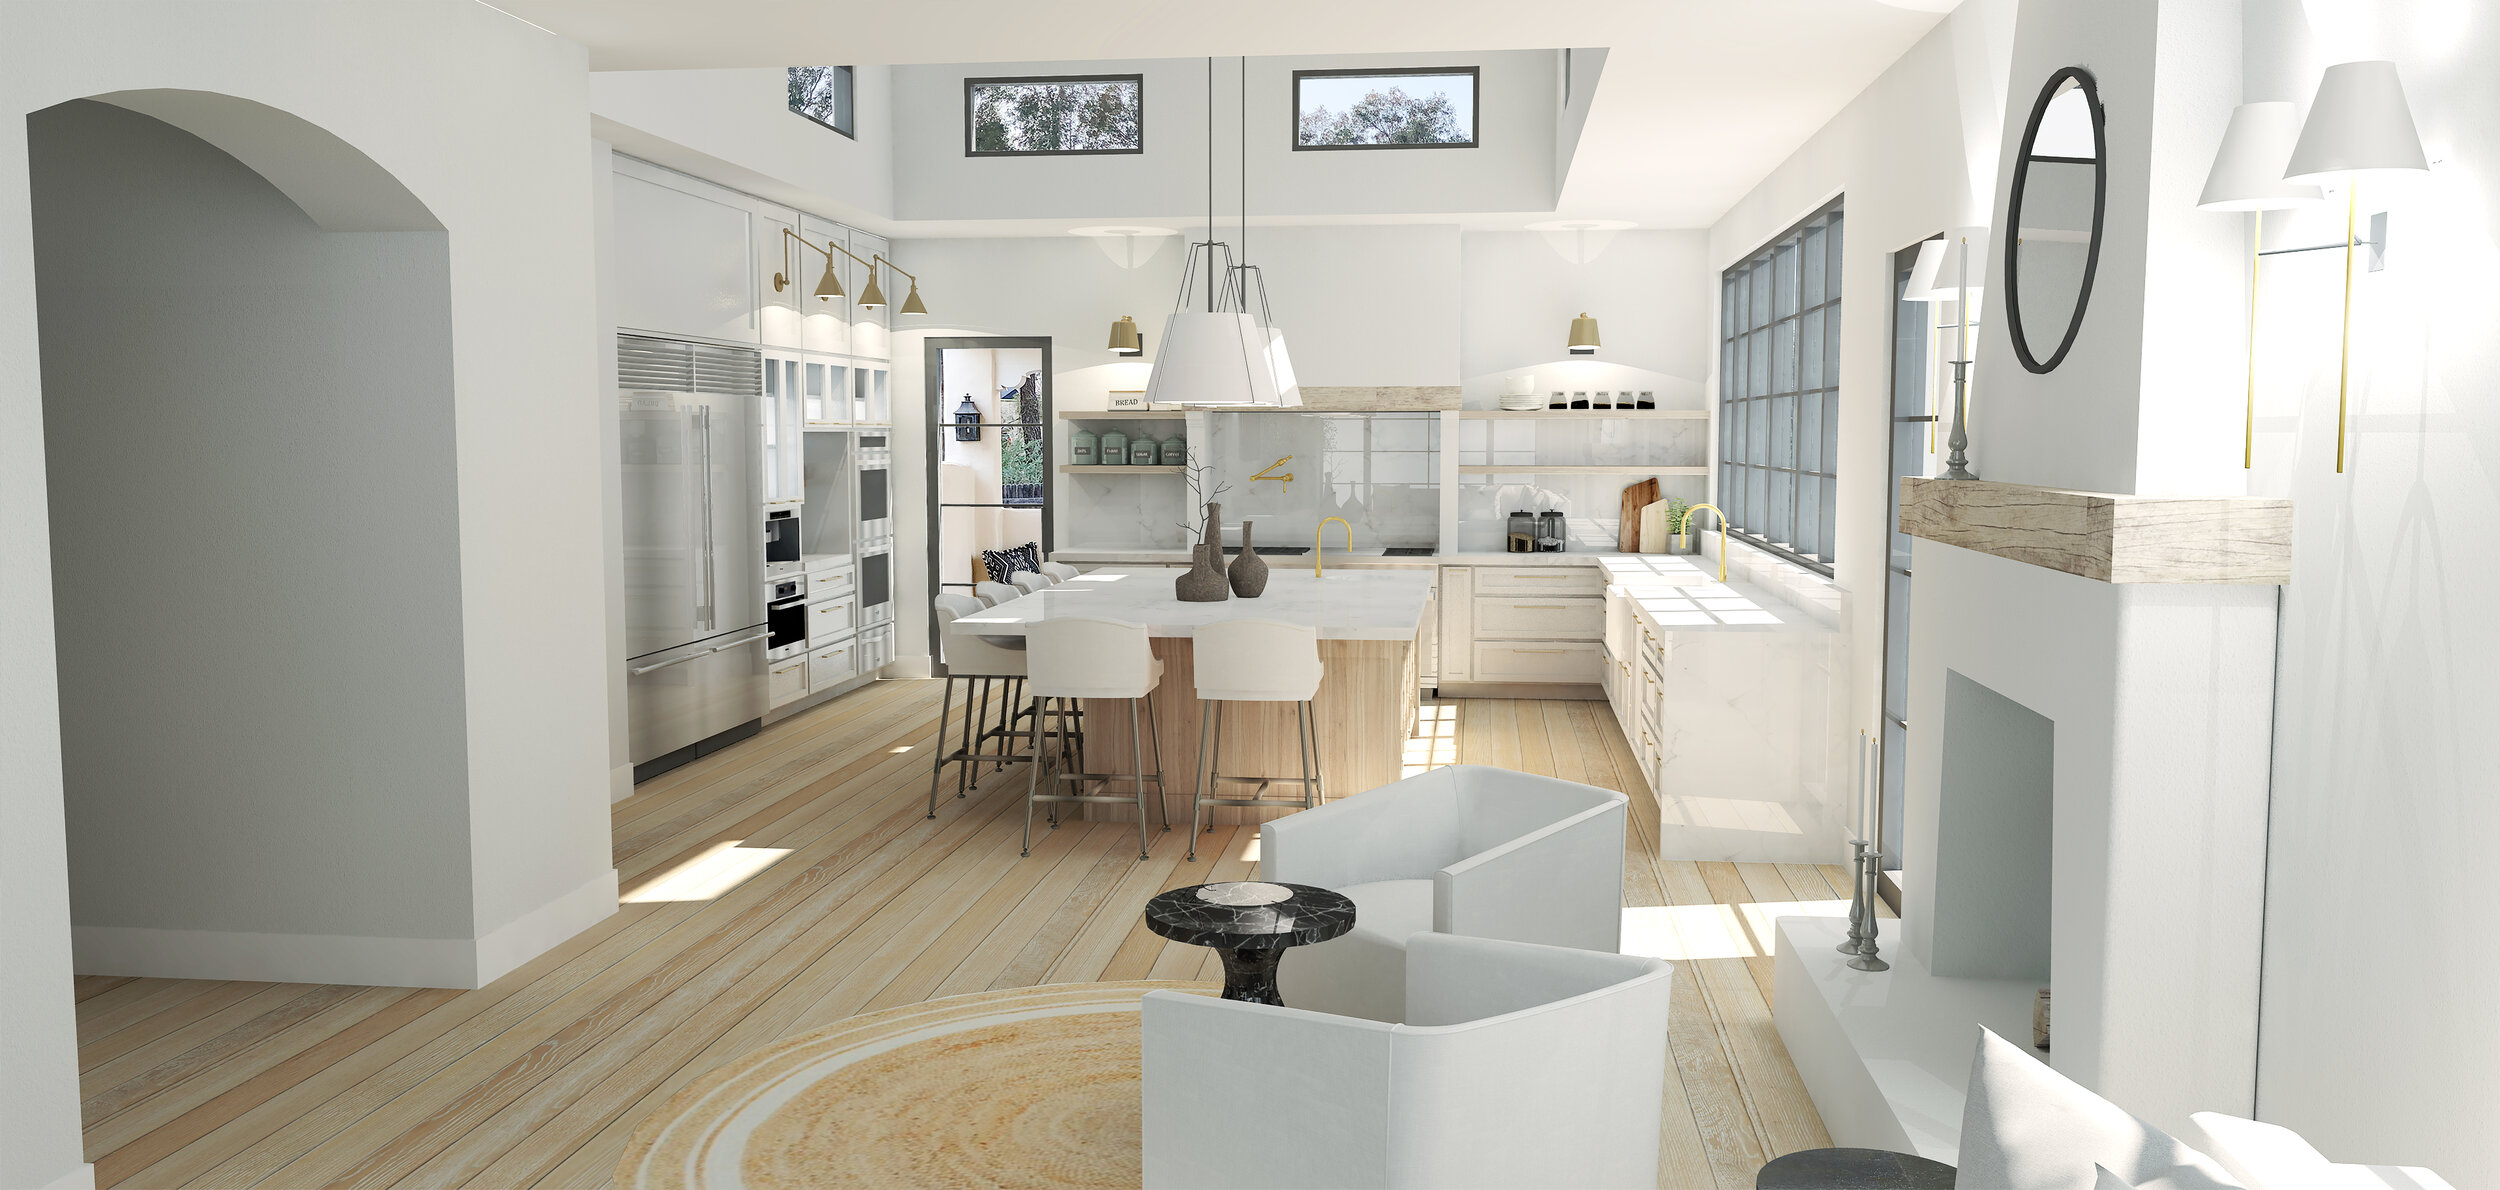 liz-tapper-interiors-kitchen-remodel-interior-design-rendering.jpg